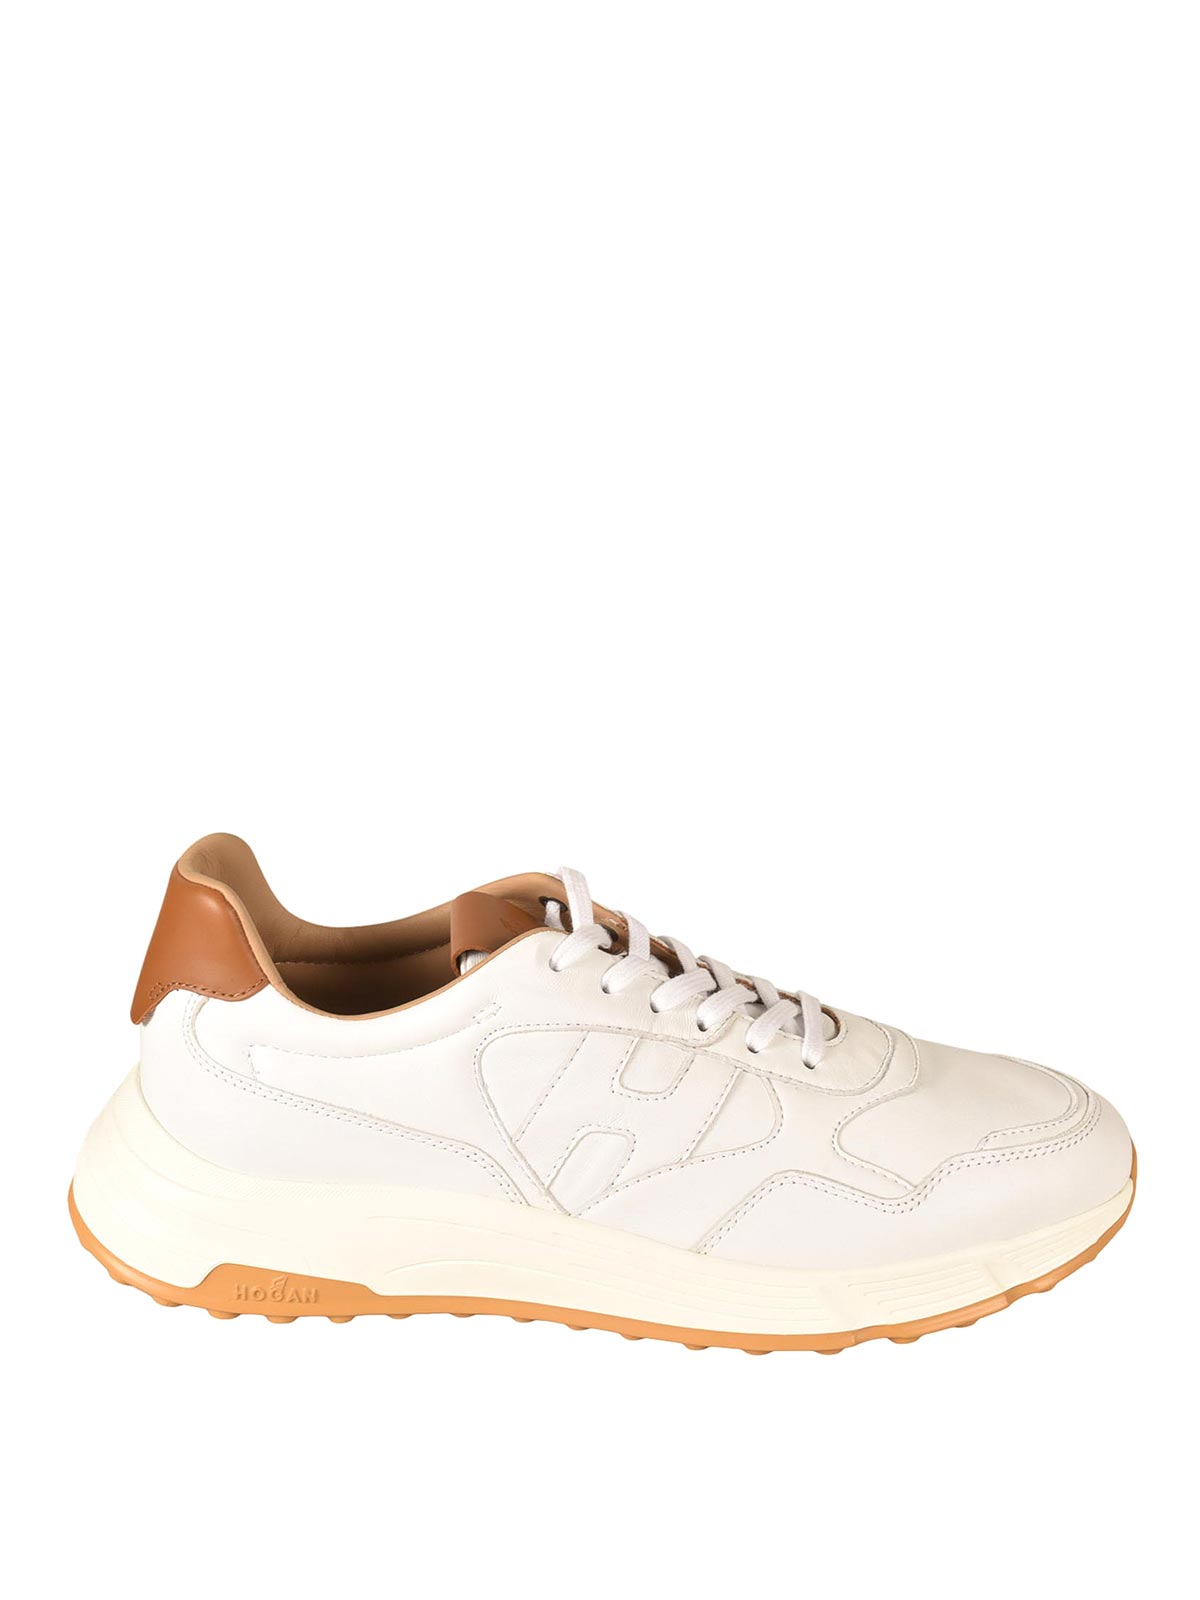 Hogan H563 Sneakers In White